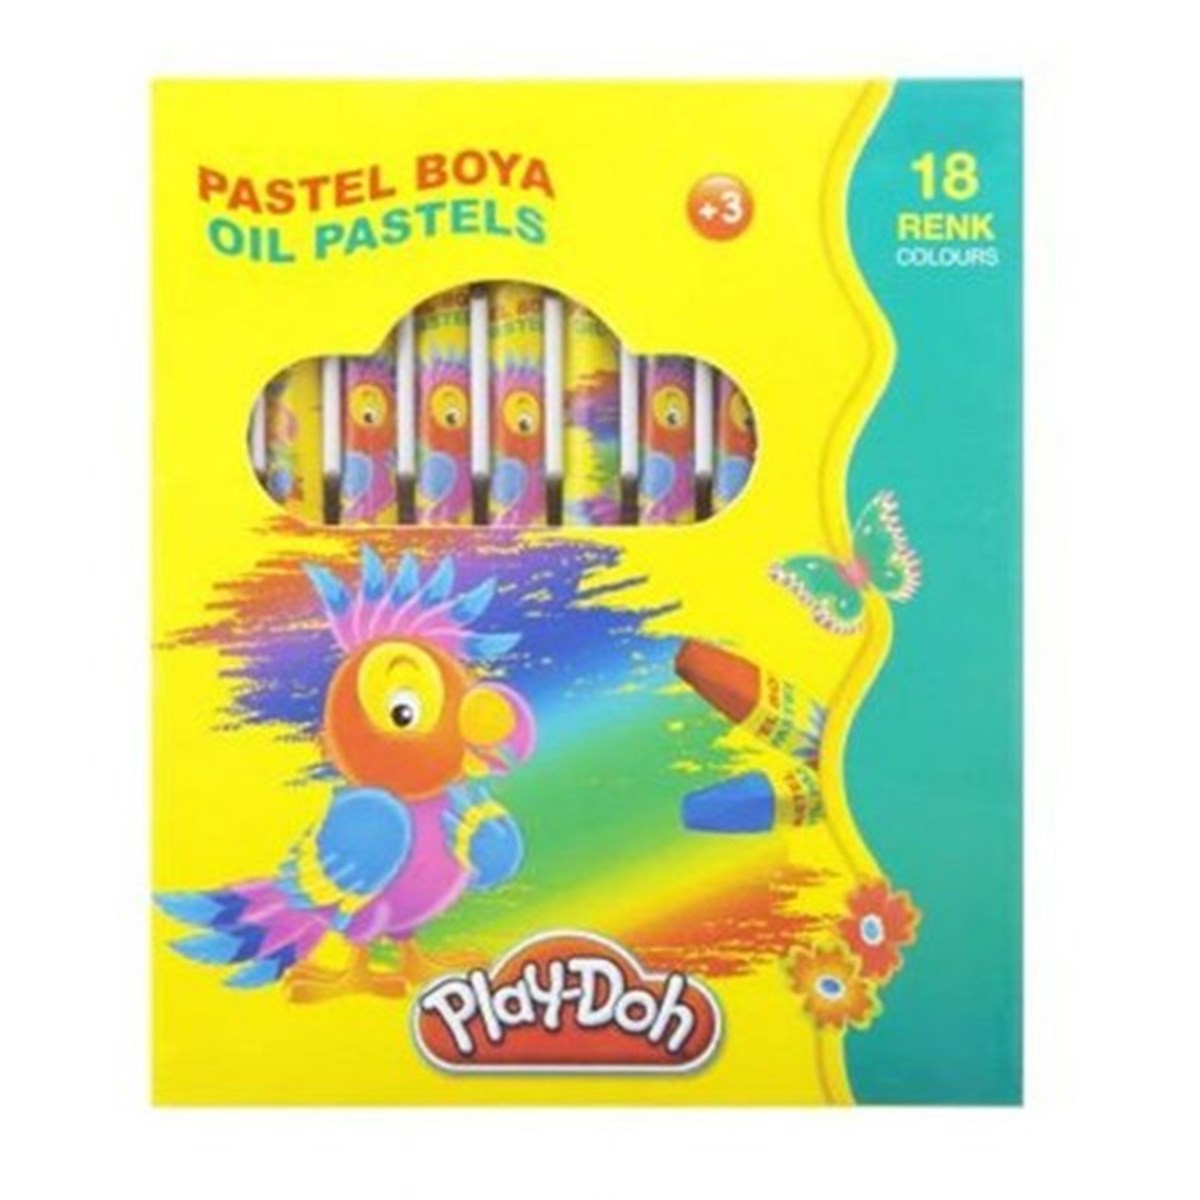 Play Doh Pastel Boya 18 Renk (EFSANE İNDİRİM)